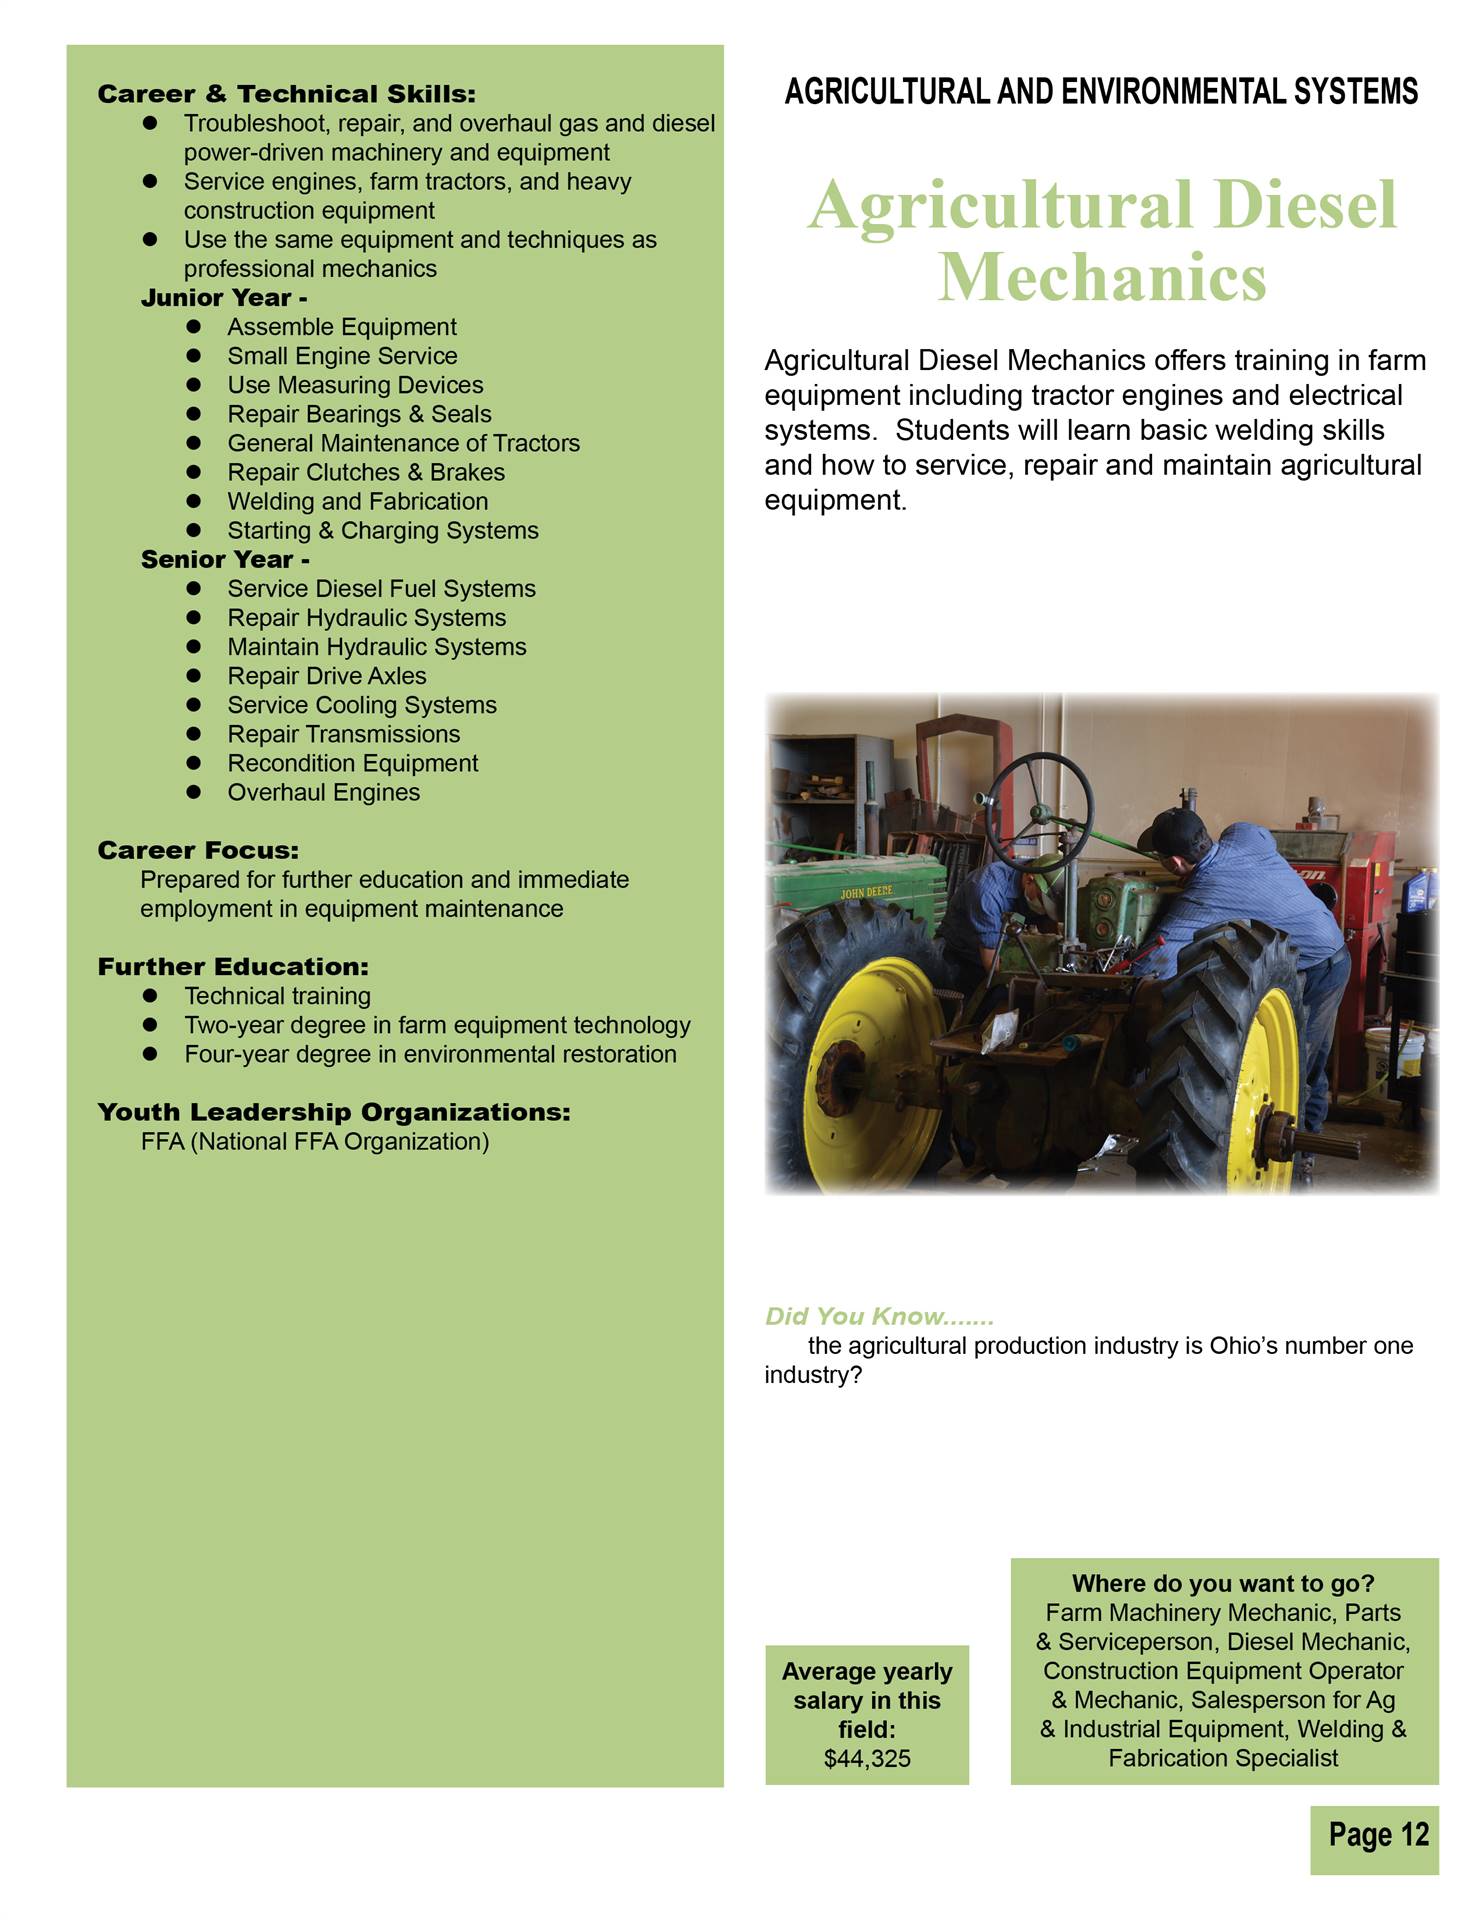 Agricultural Diesel Mechanics